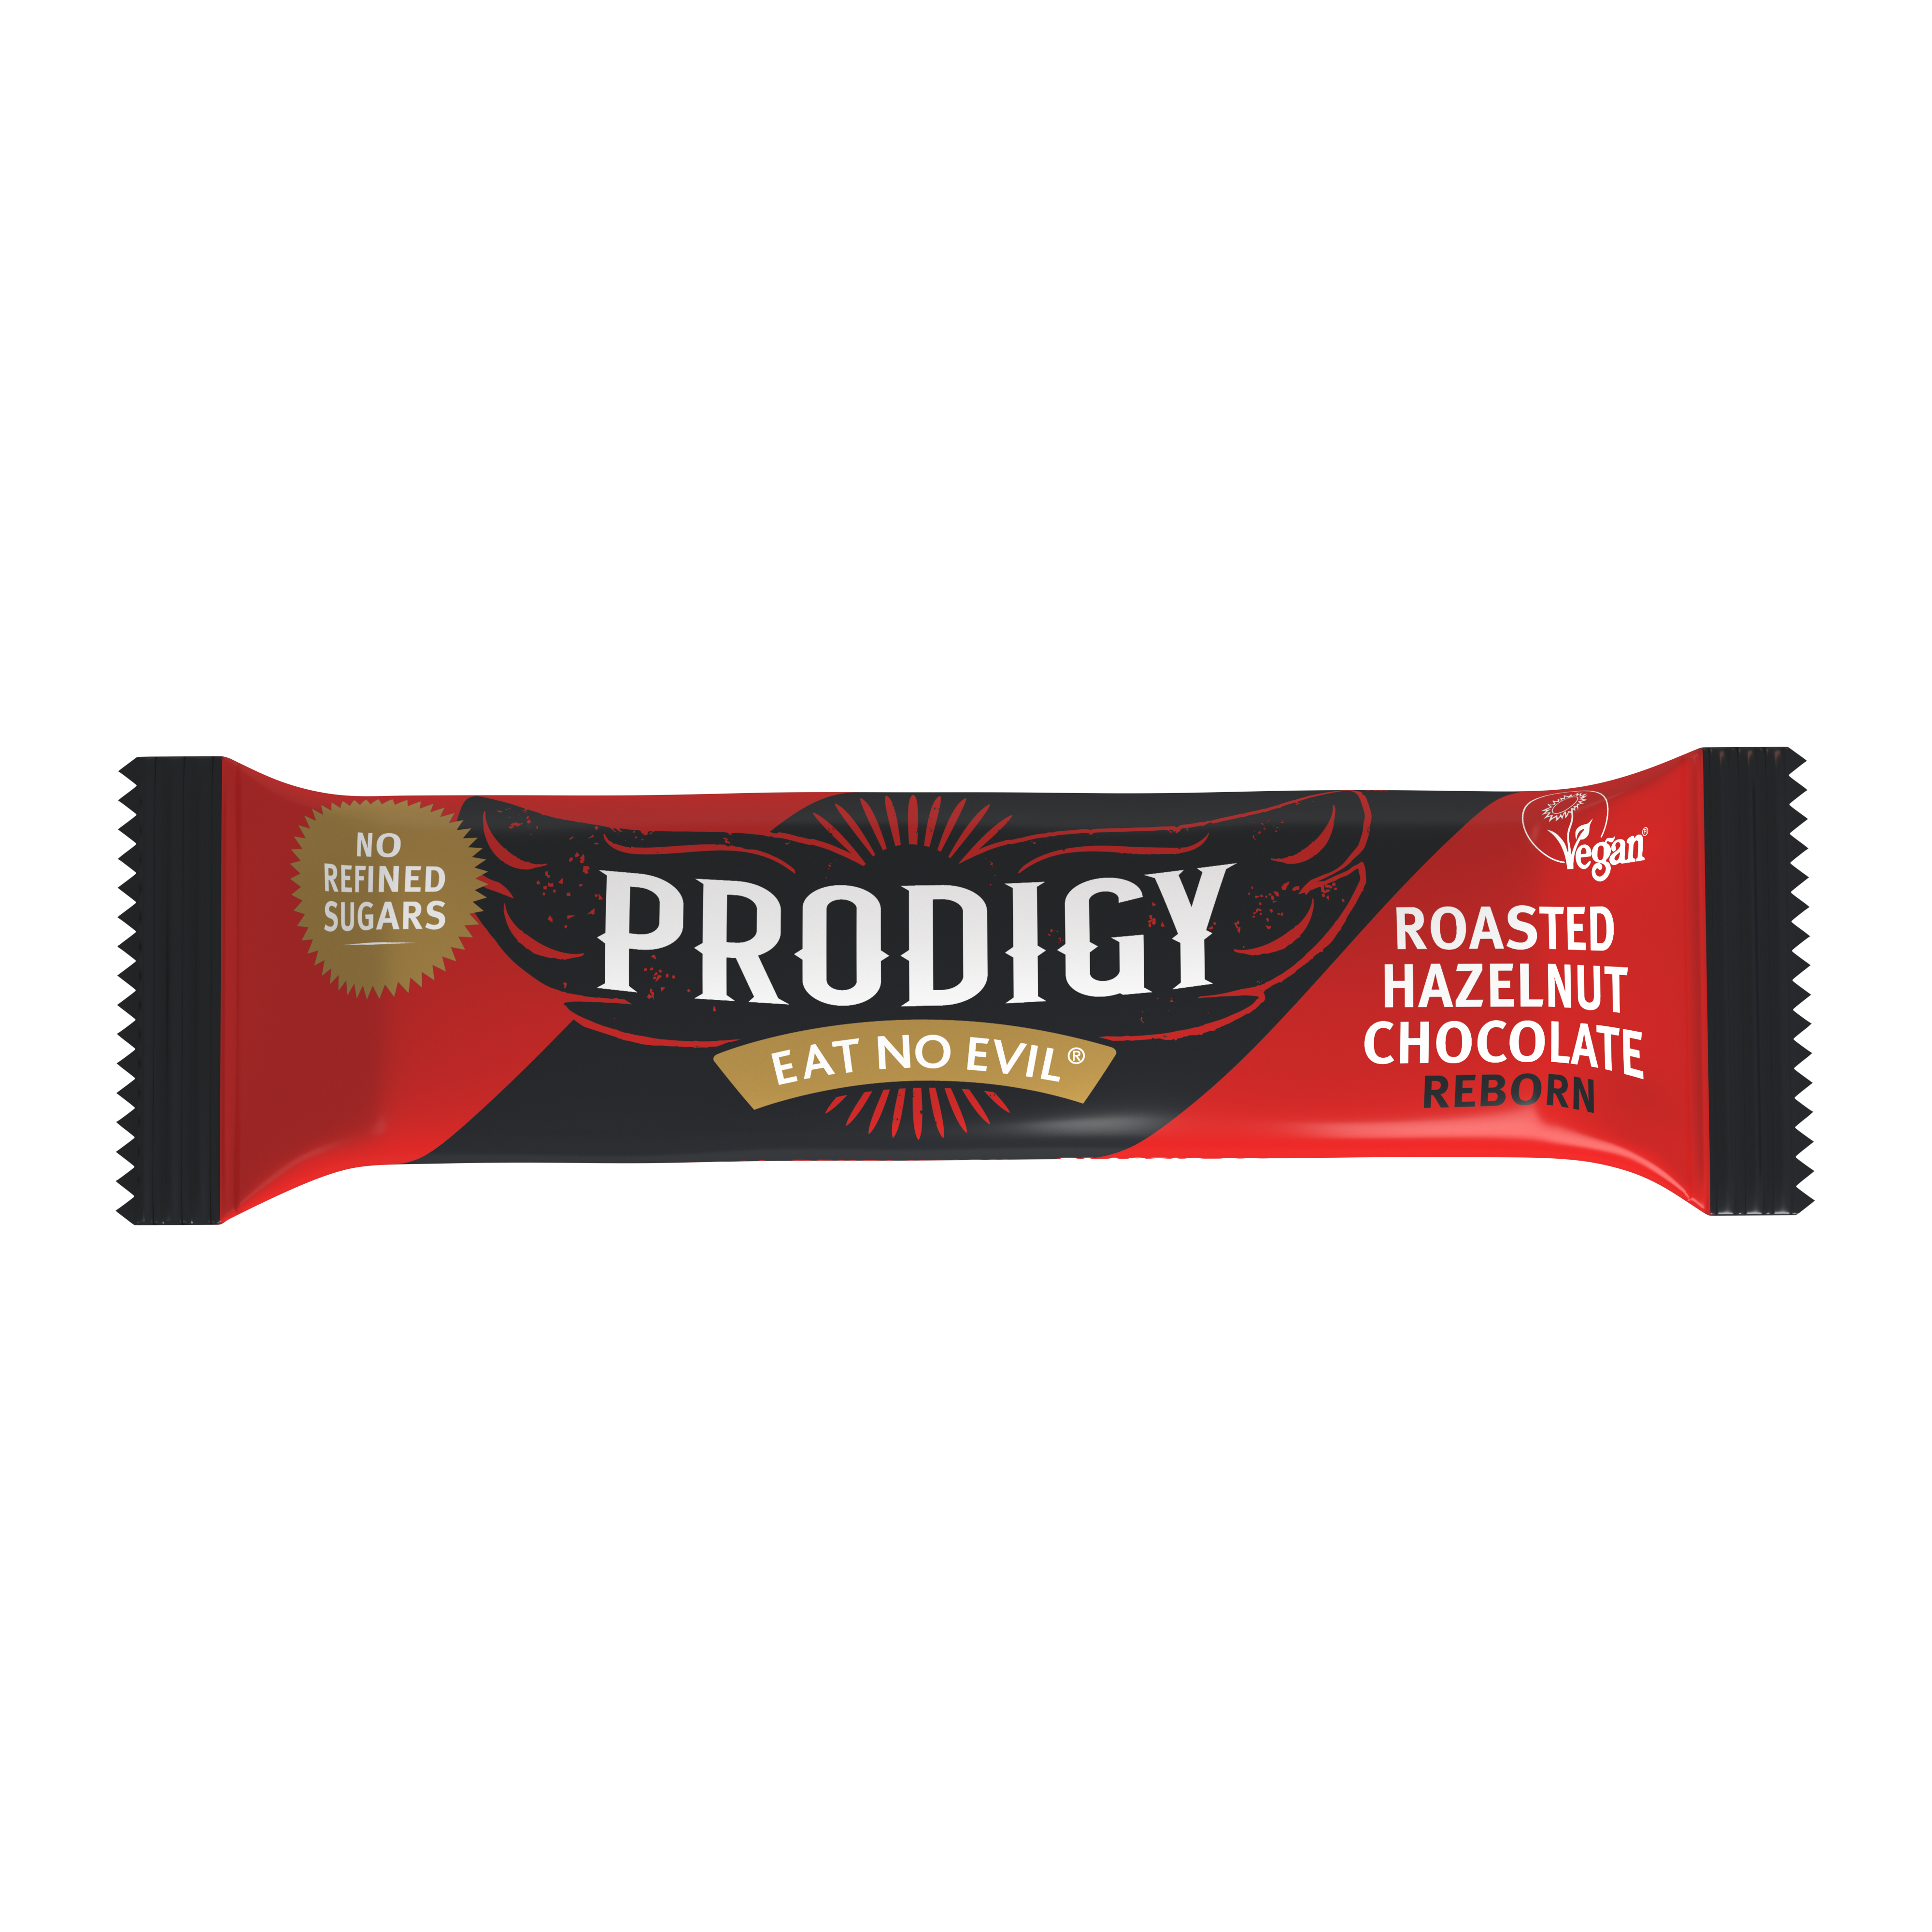 Prodigy Hazelnut chocolate bar